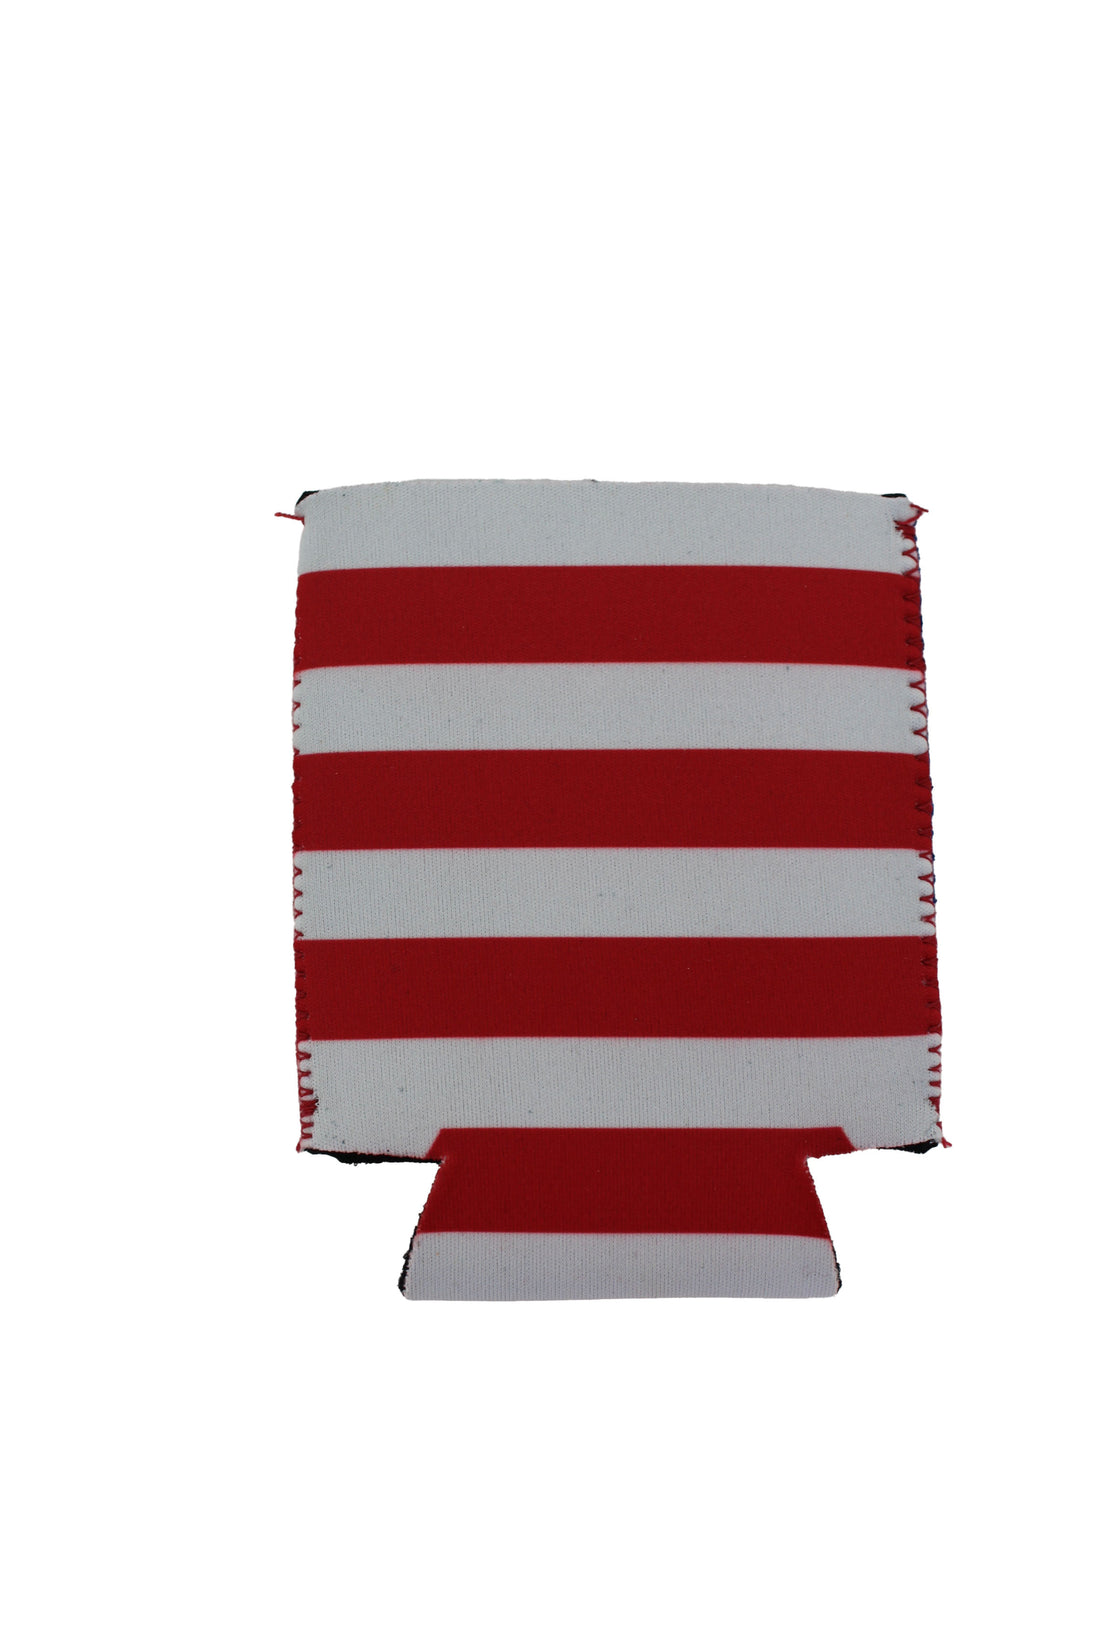 Outer Banks USA Flag Can Koozie